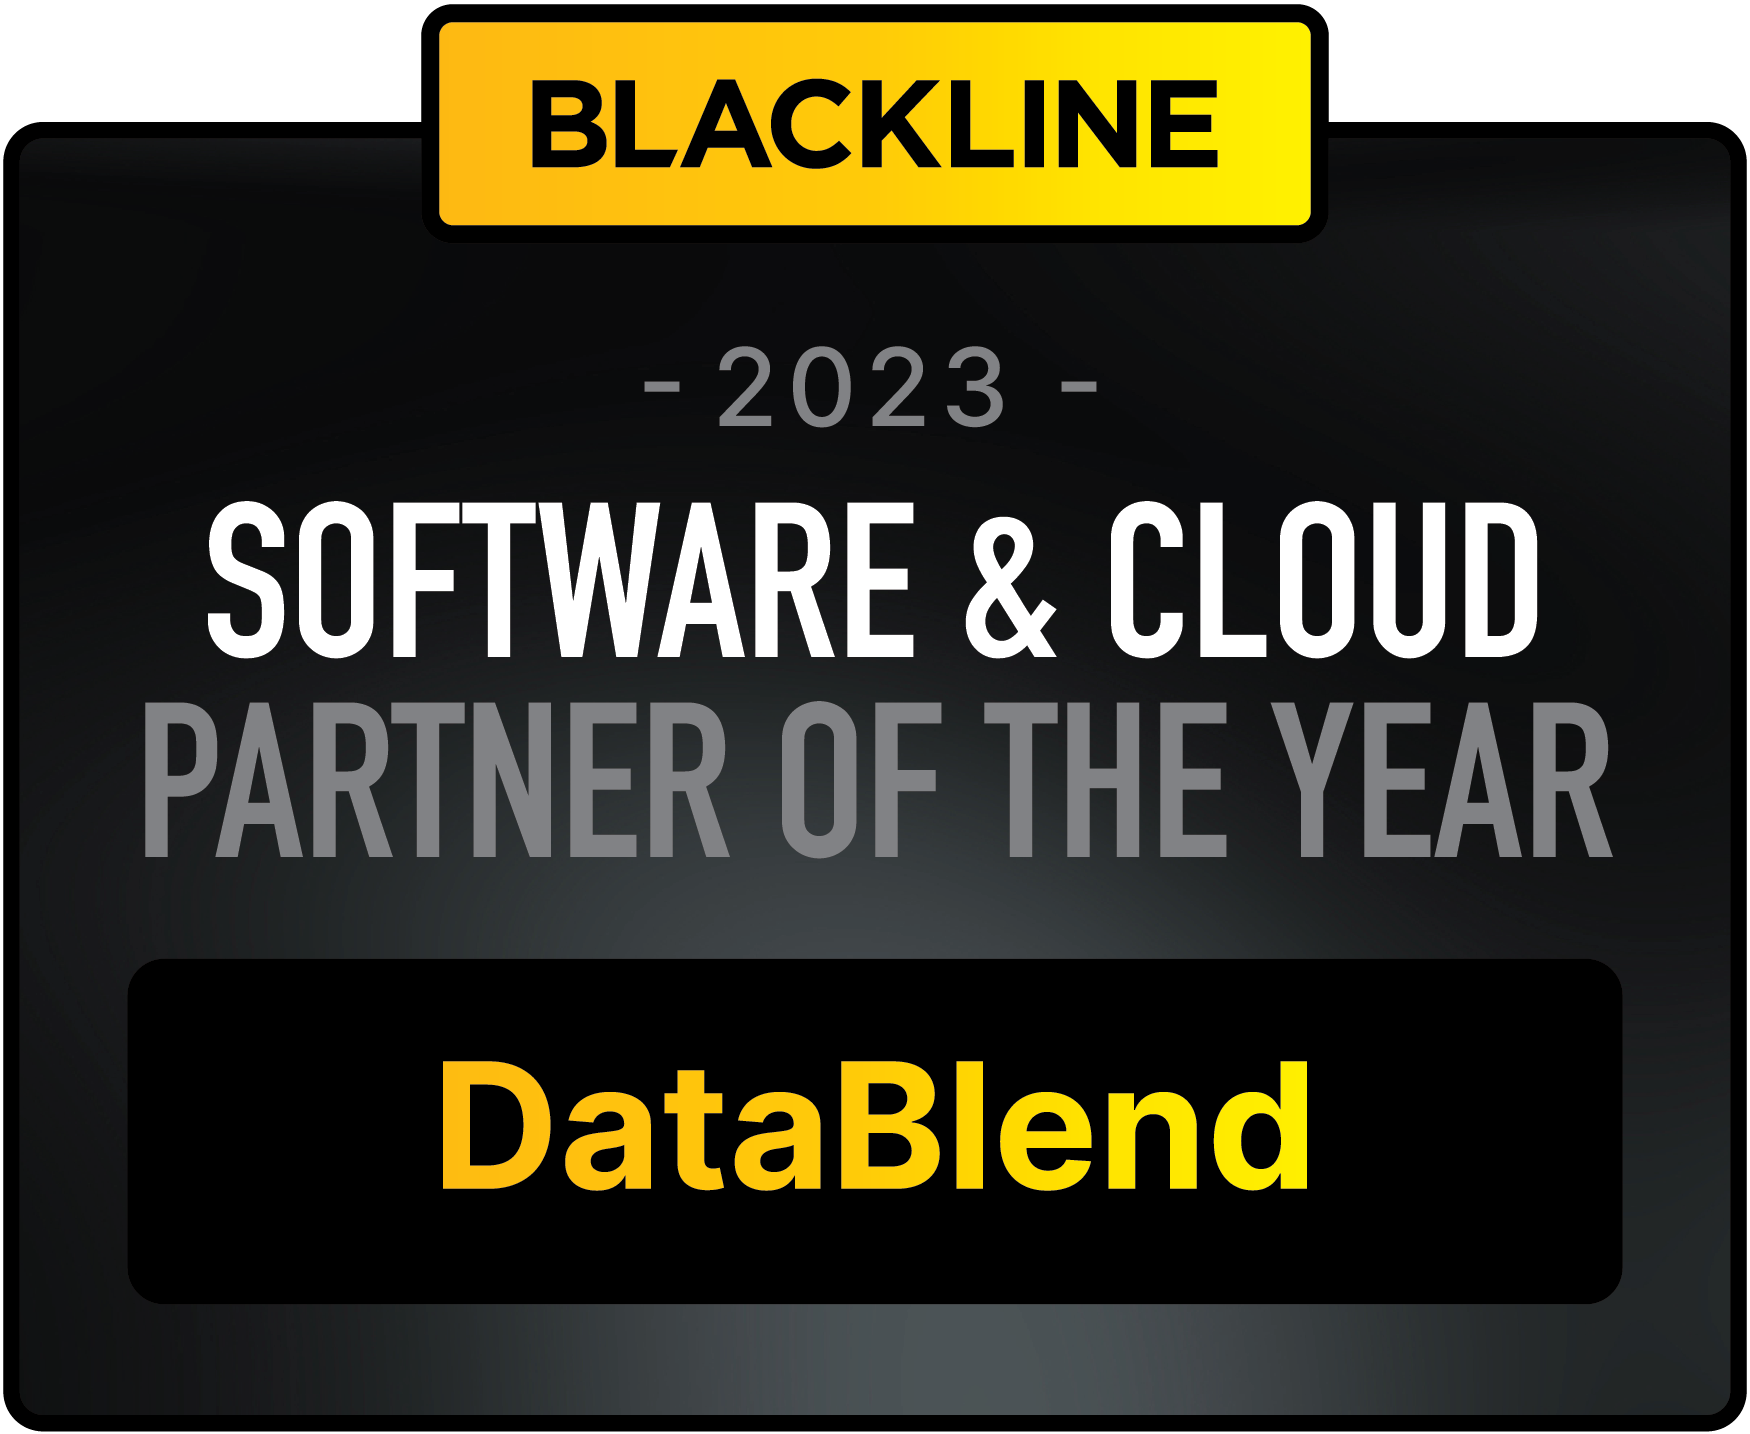 DataBlend Receives BlackLine's 2023 Software & Cloud Partner Award